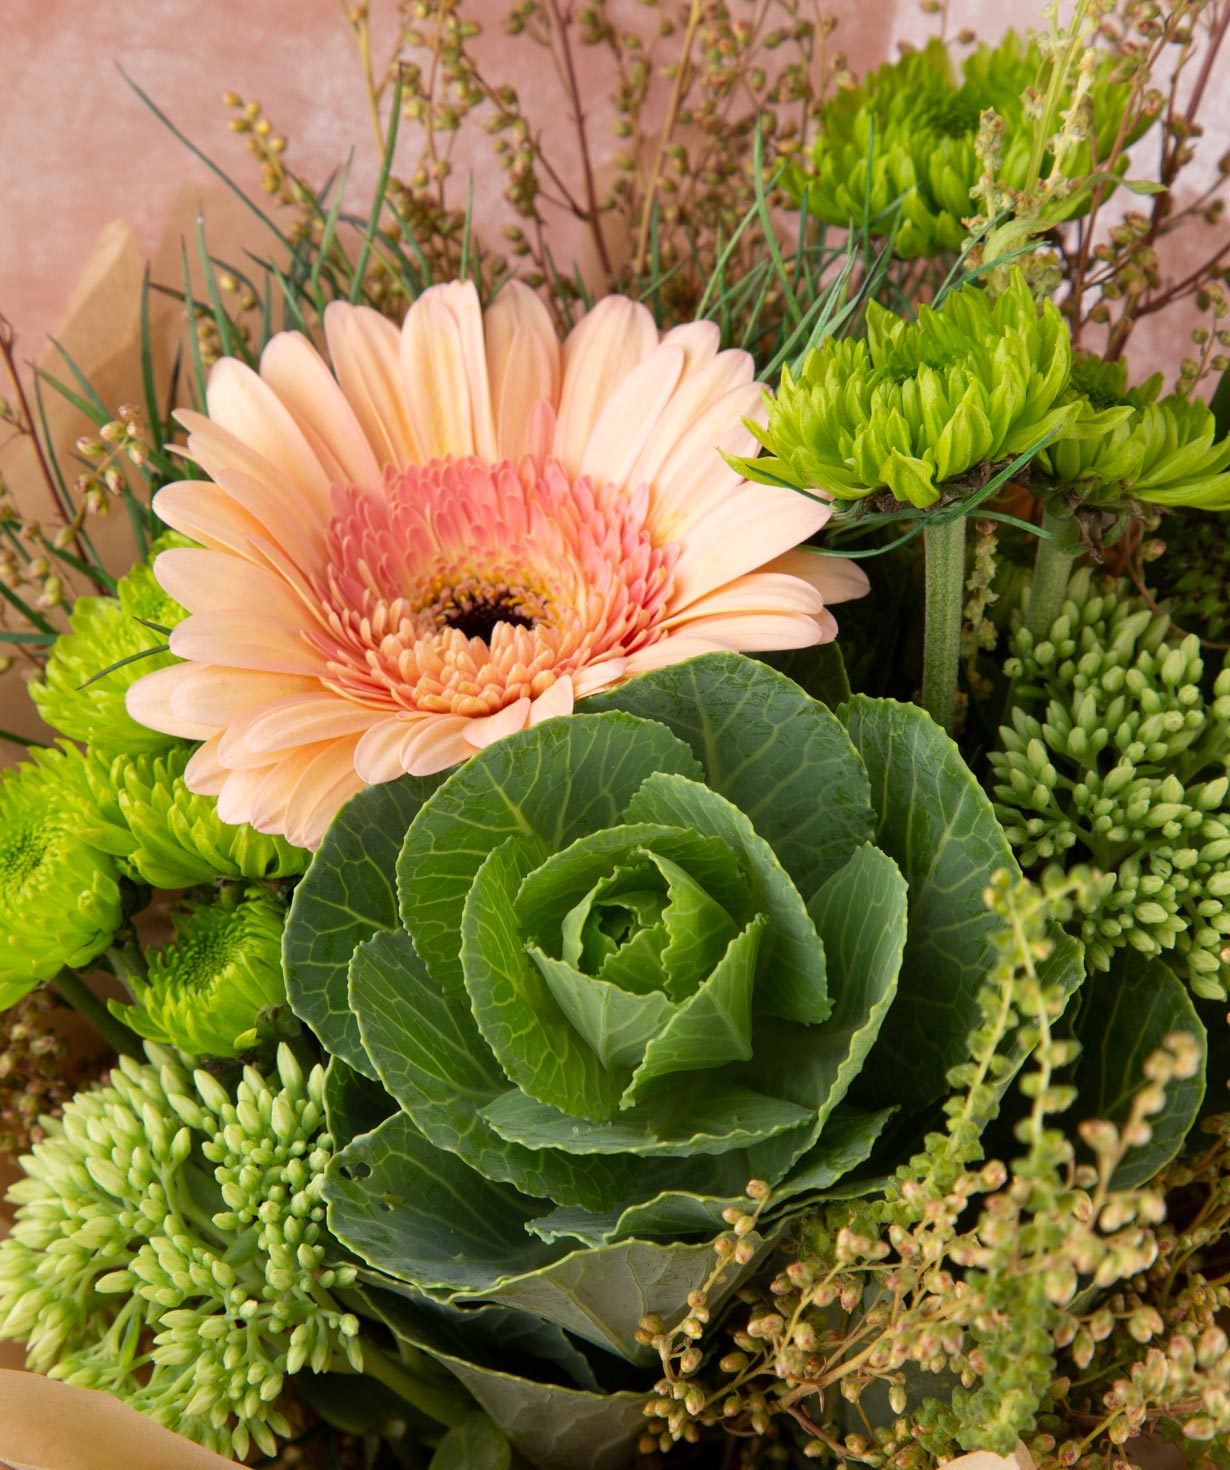 Bouquet  `Worcester` with chrysanthemums, gerbera, wildflowers